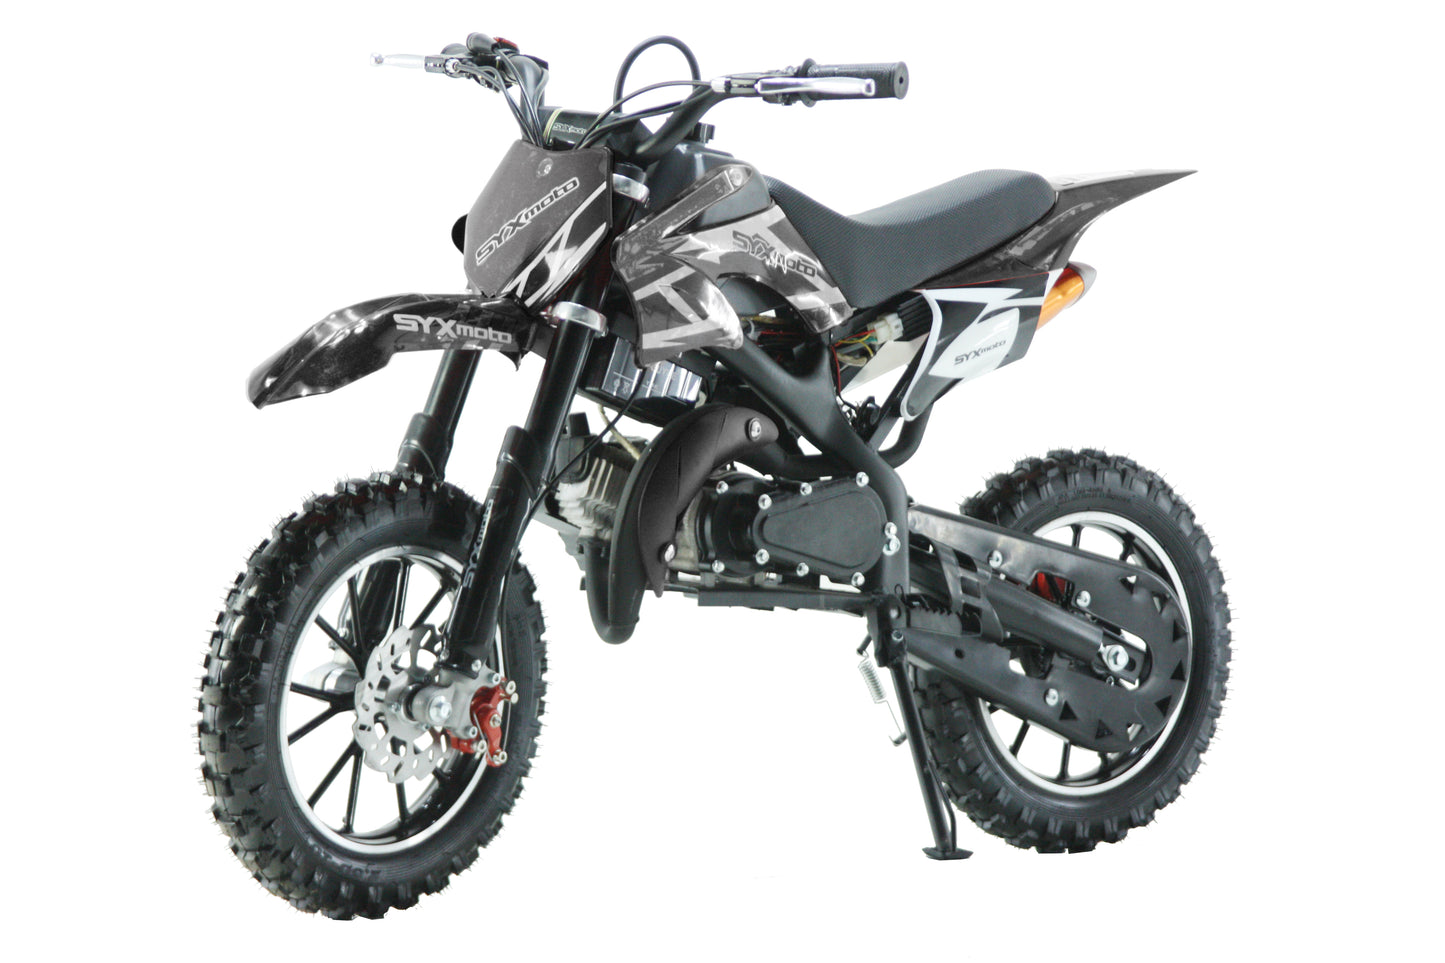 SYX MOTO Holeshot ES 50cc Electric Start/Pull Start Mini Dirt Bike, Black - SYX MOTO